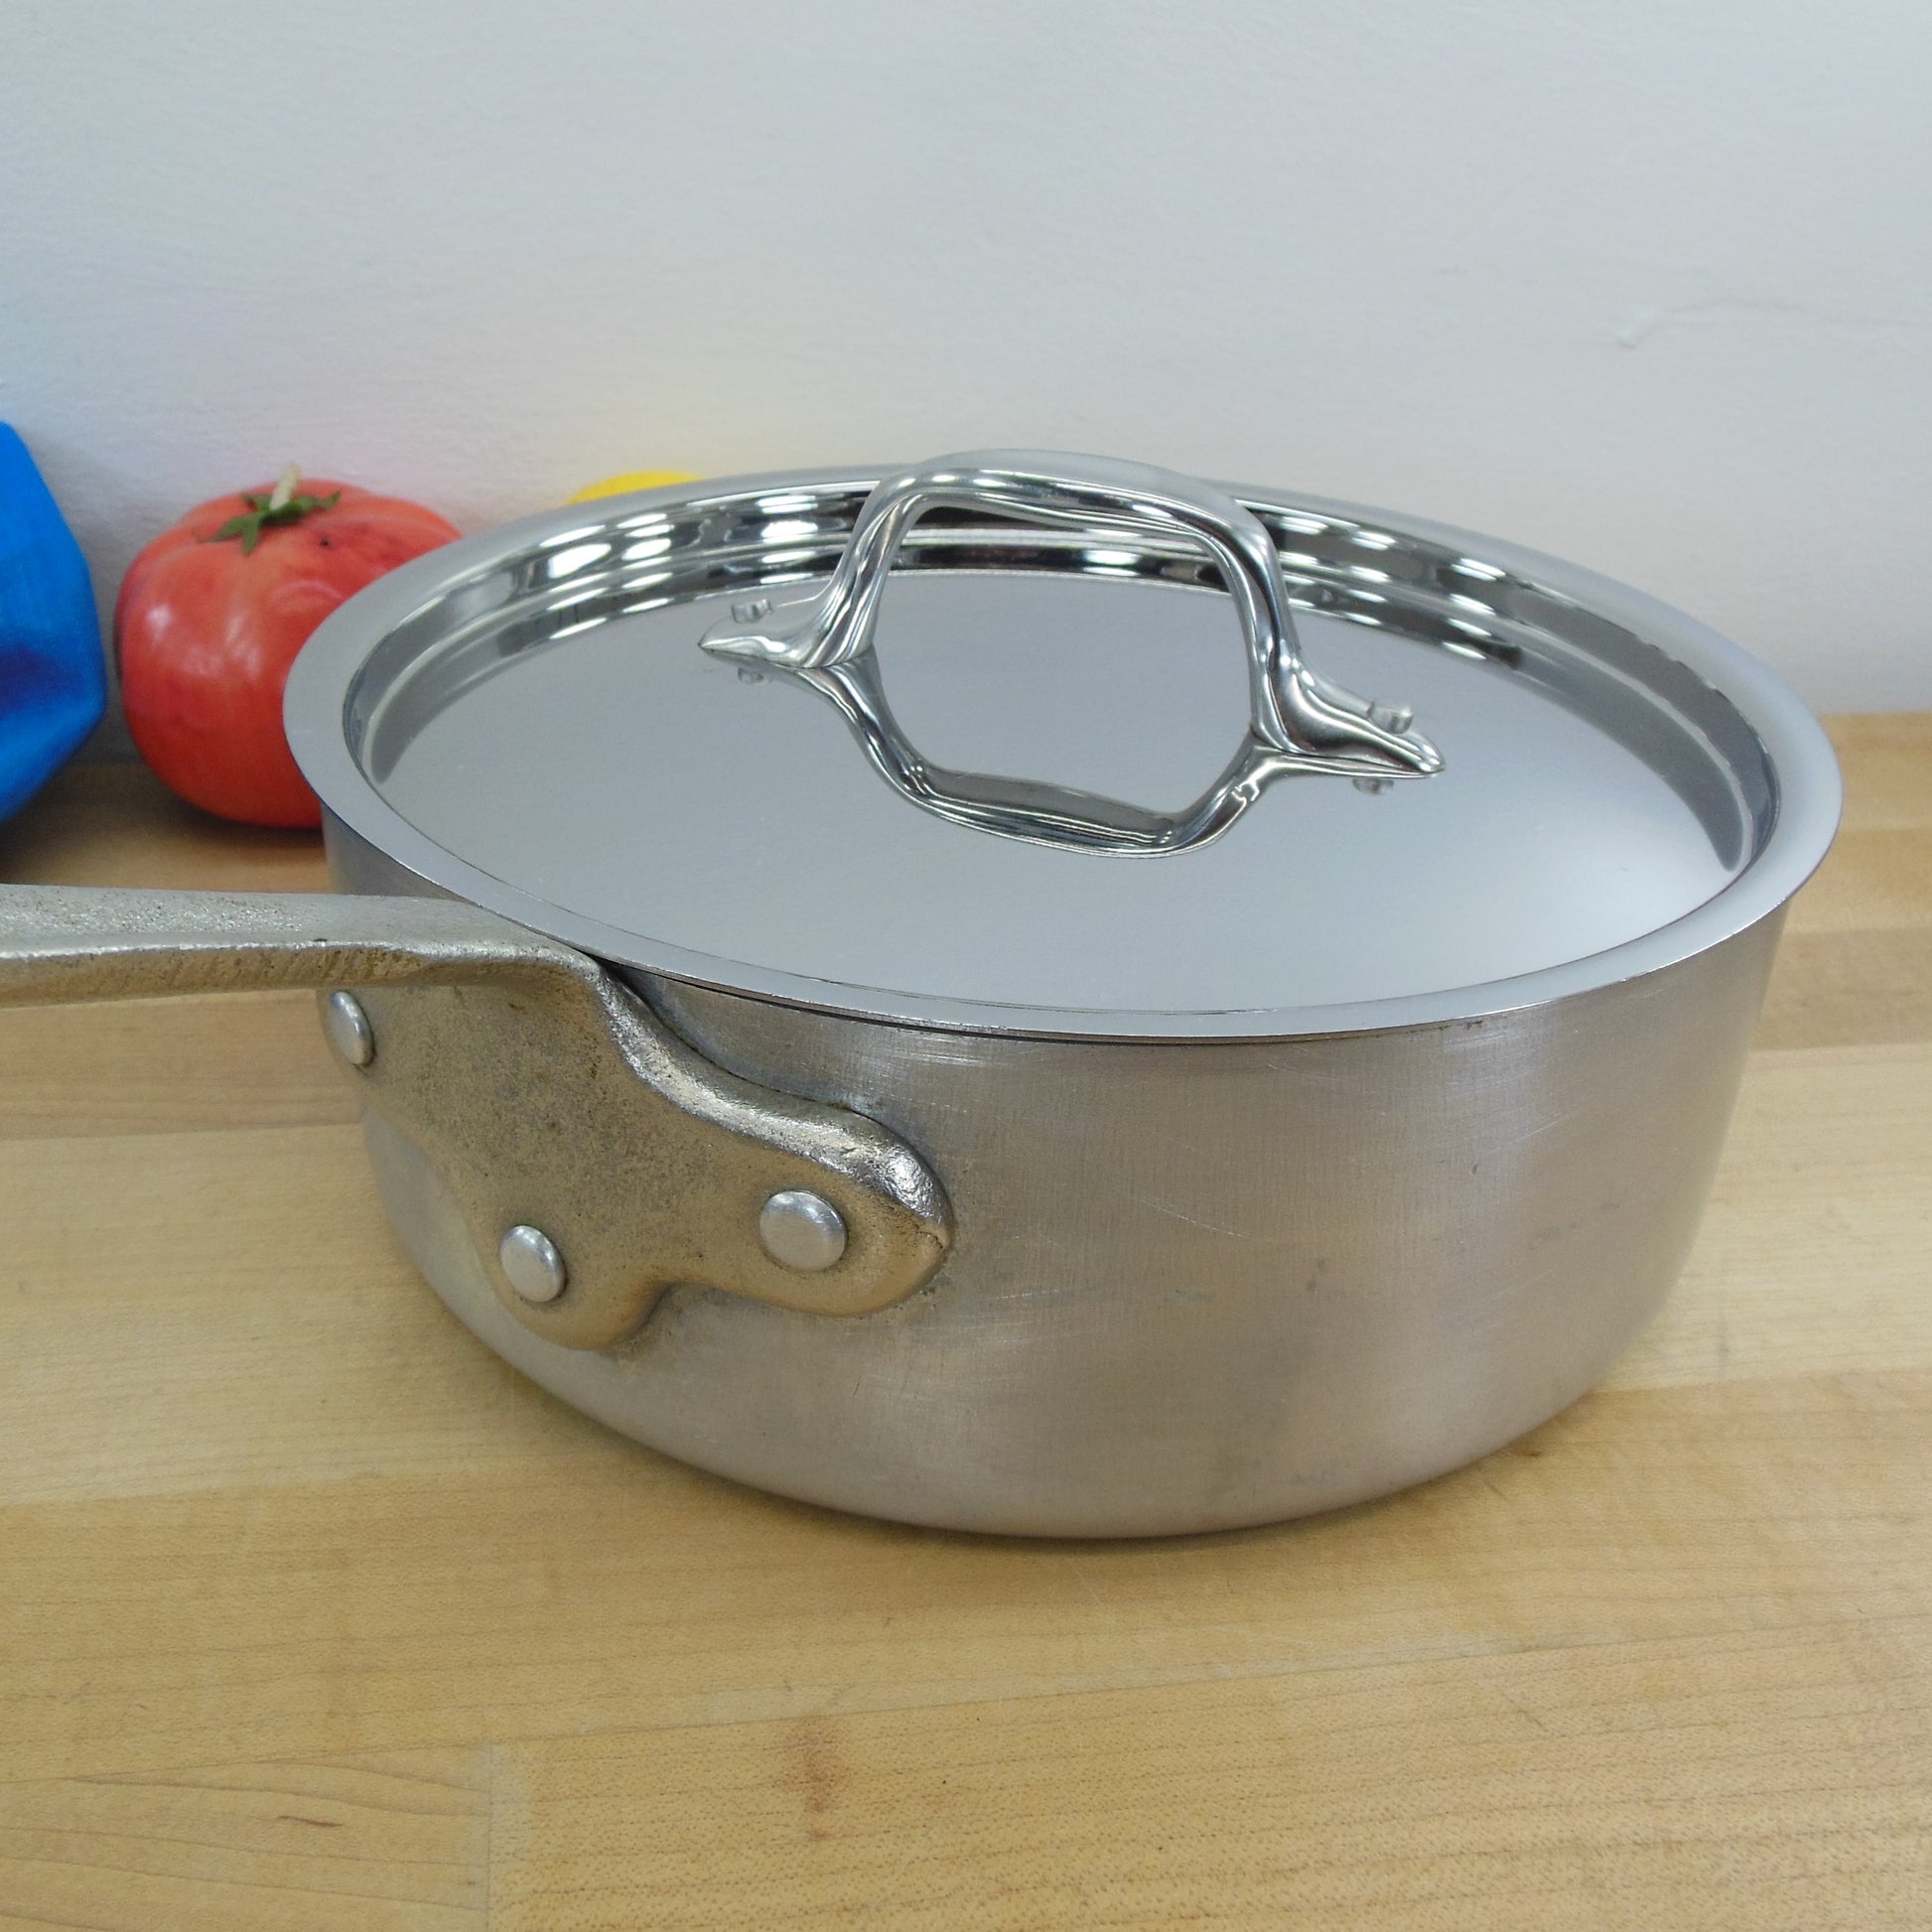 Master Cuisine Stainless Steel 2-Quart Saucepan